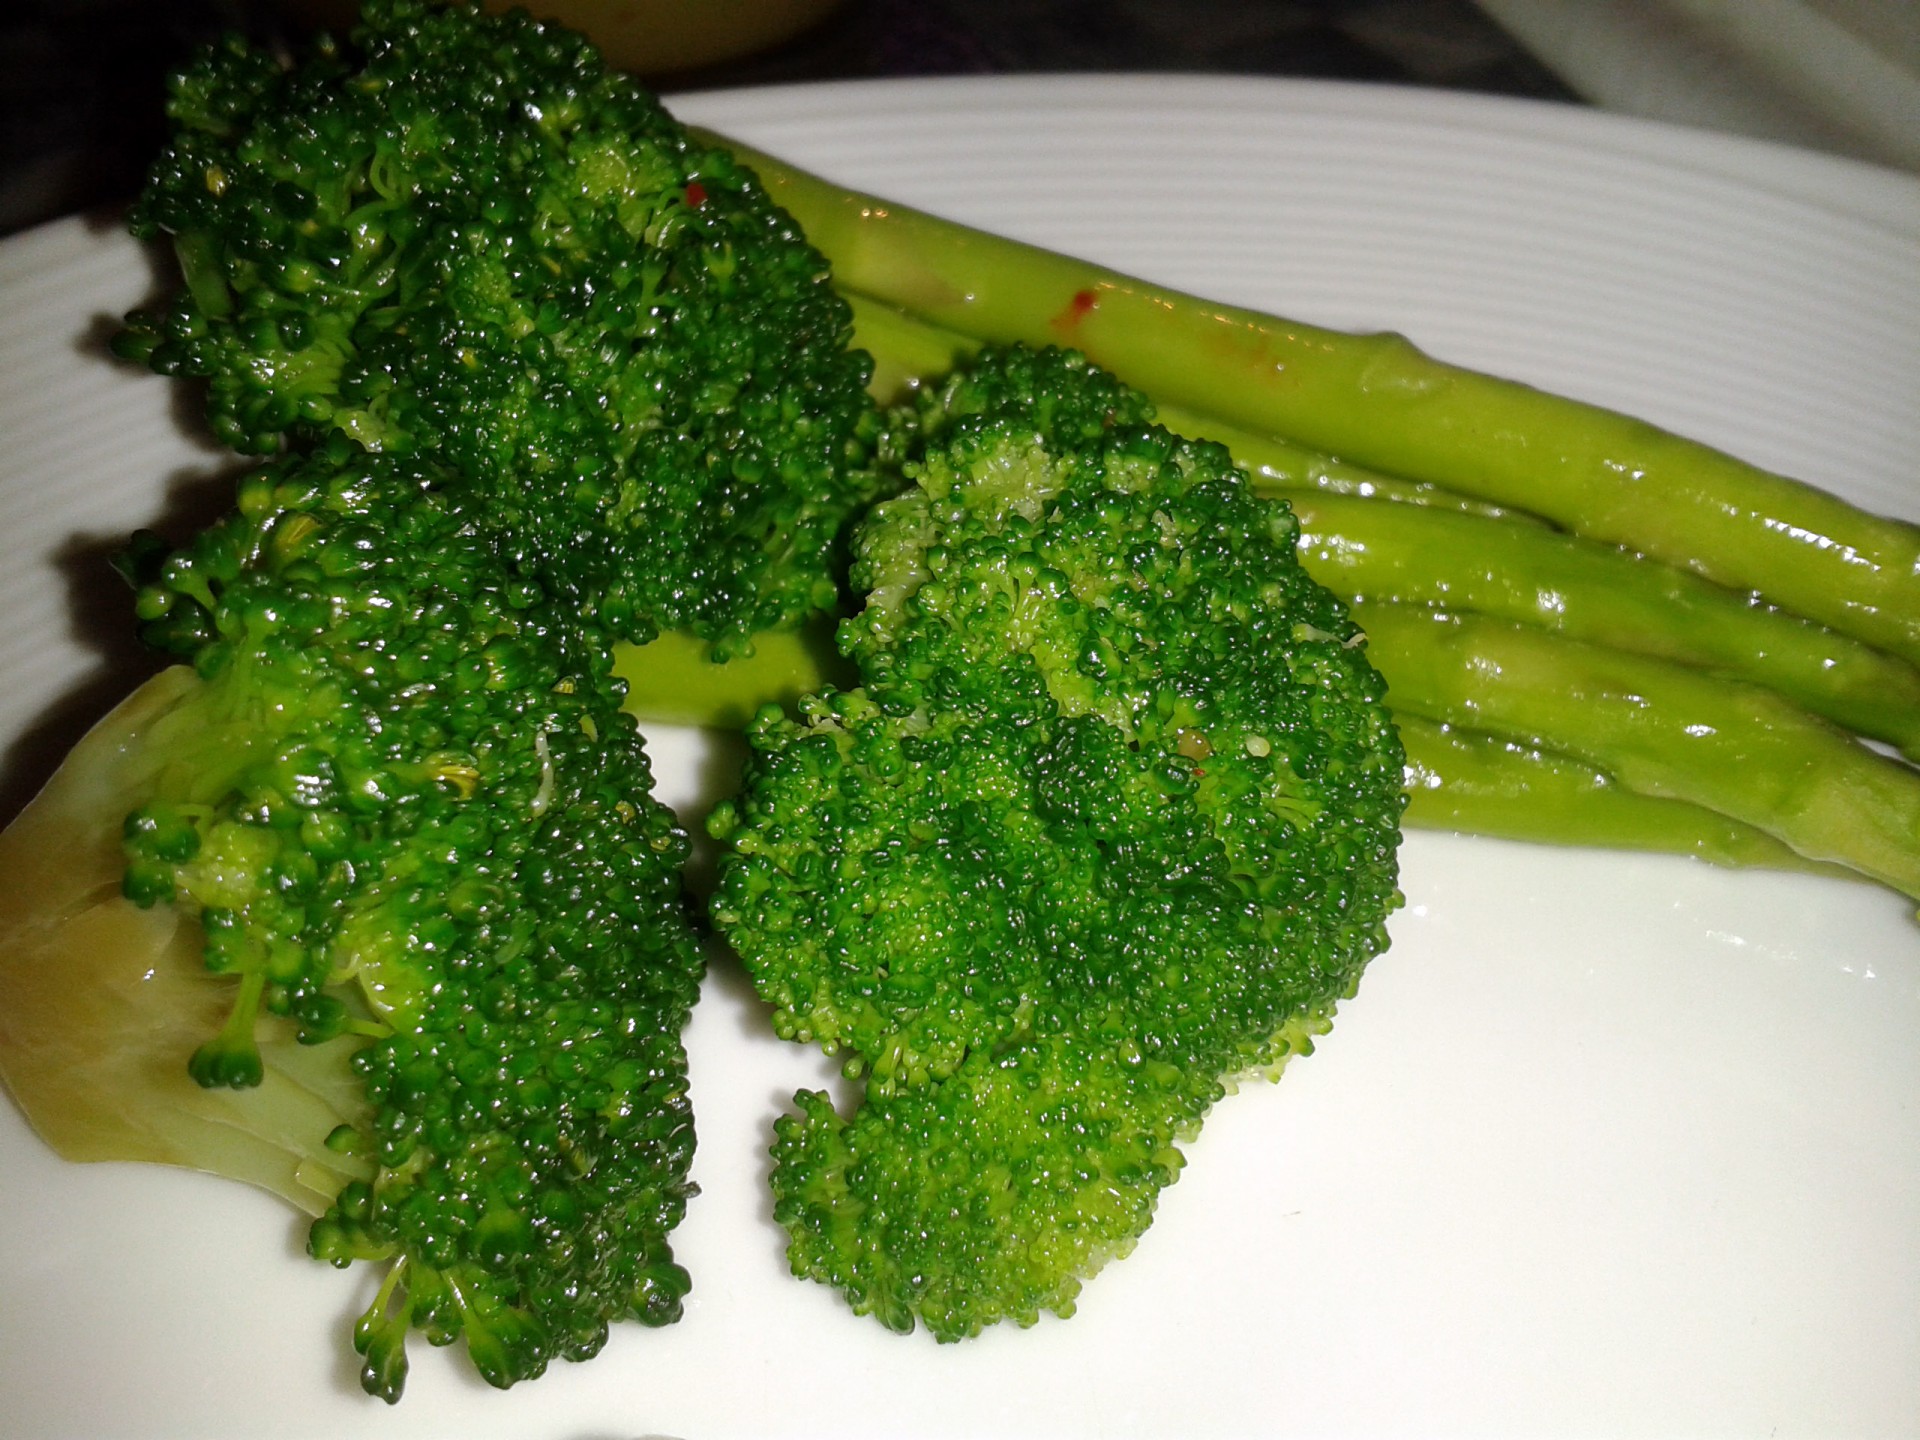 Broccoli Slaw